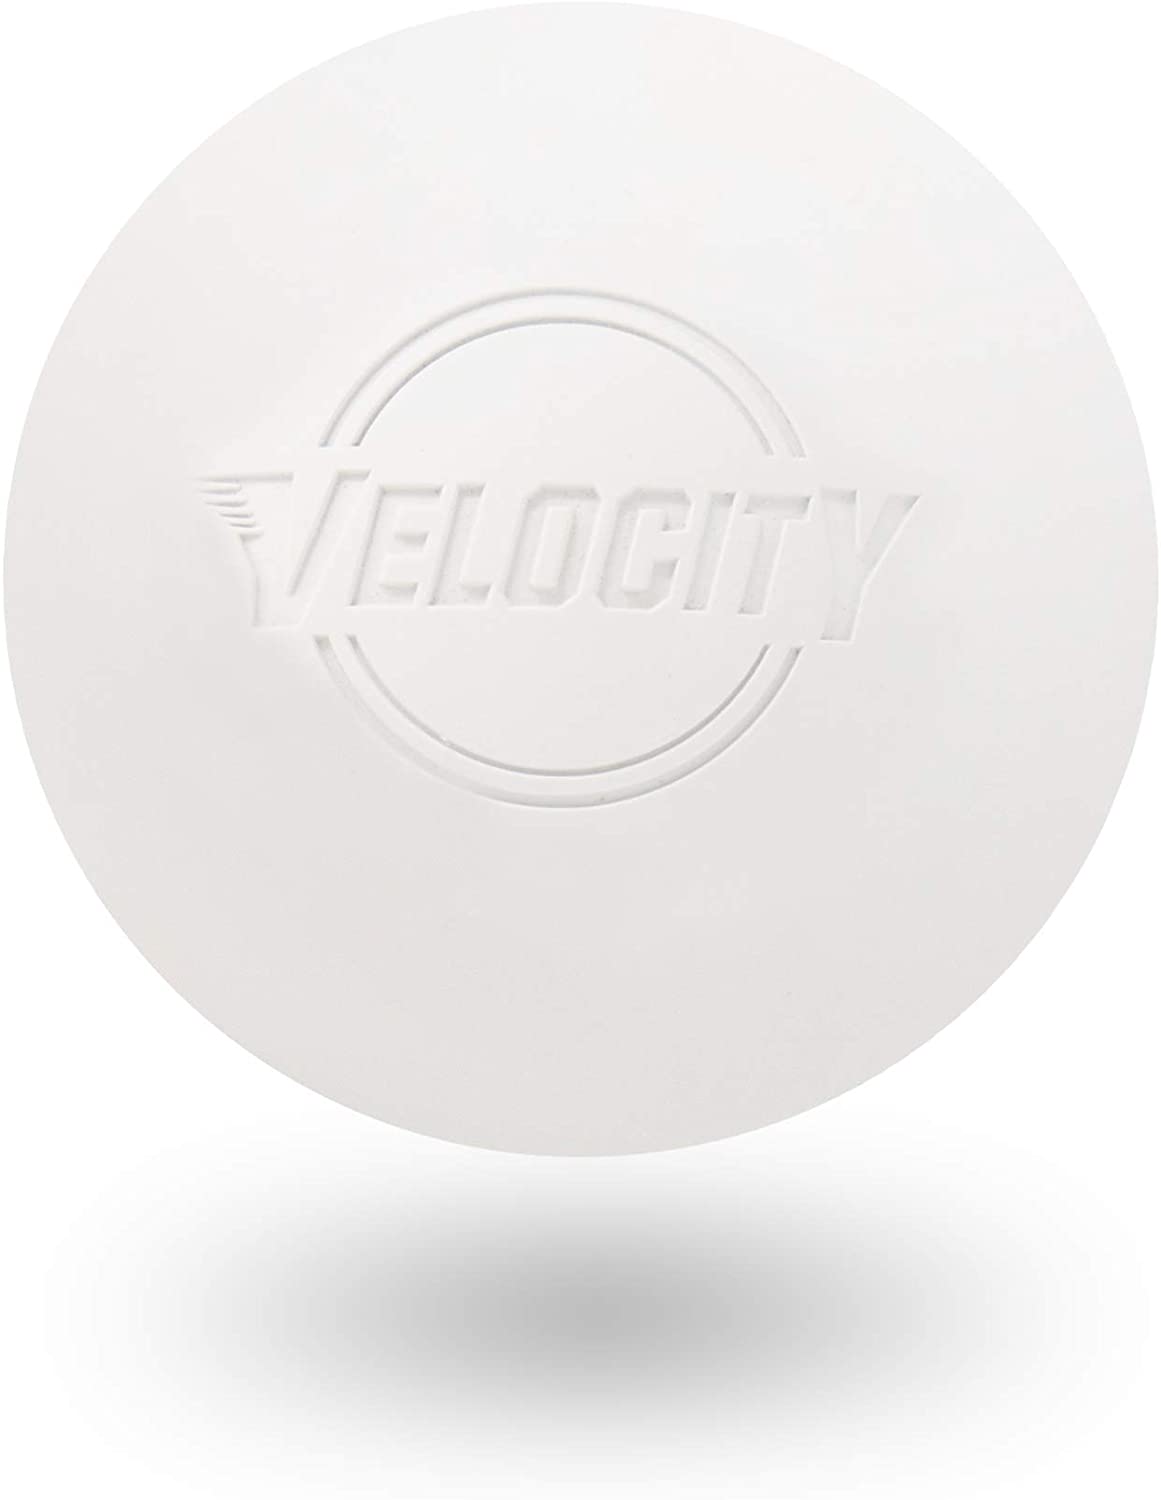 Velocity NOCSAE Professional Lacrosse Balls, 120-Pack